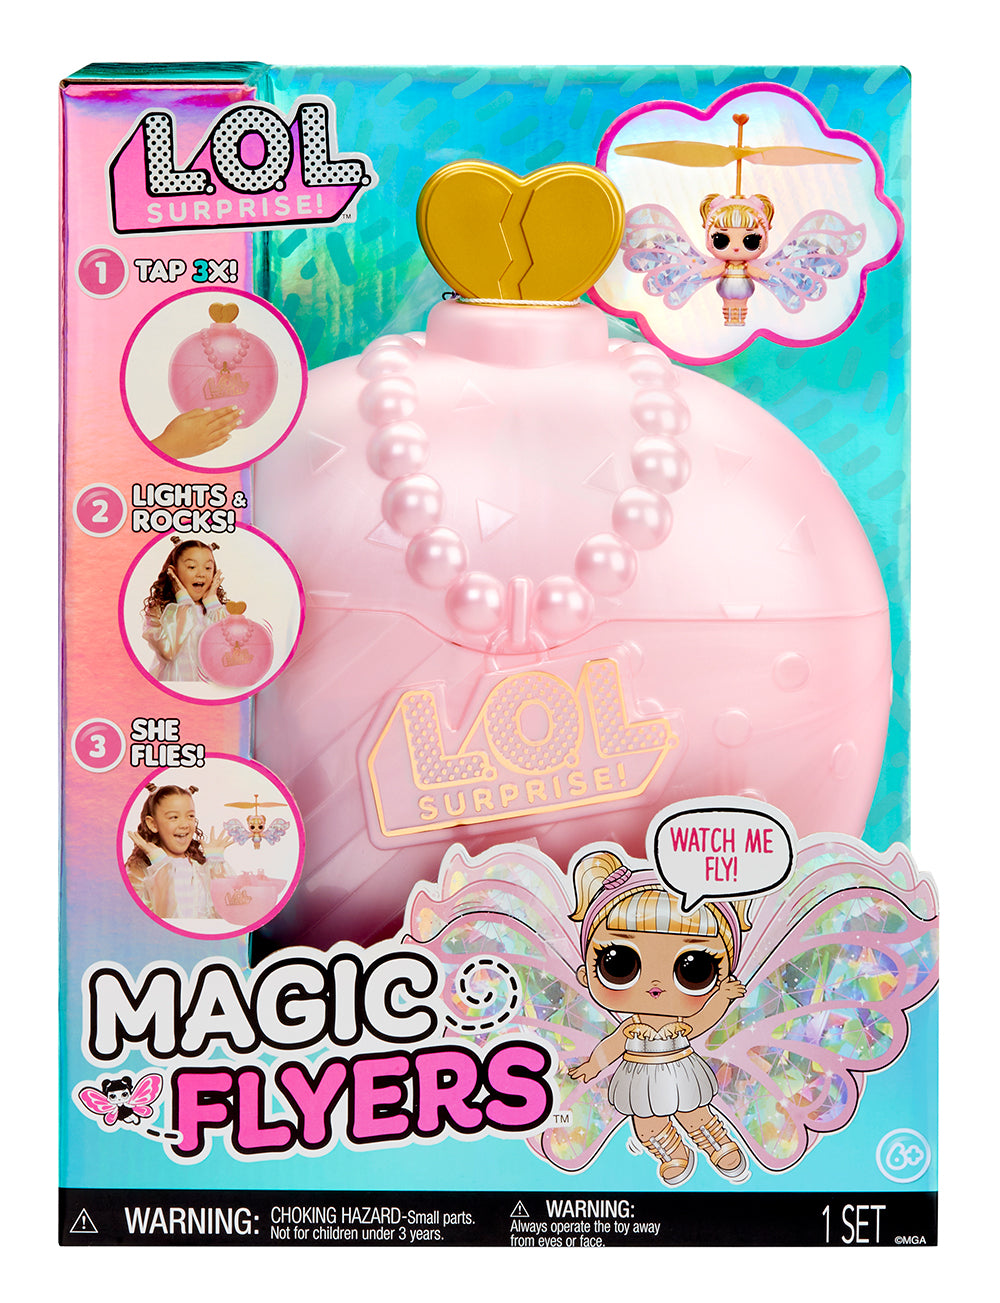 L.O.L. Surprise! Magic Flyers Doll